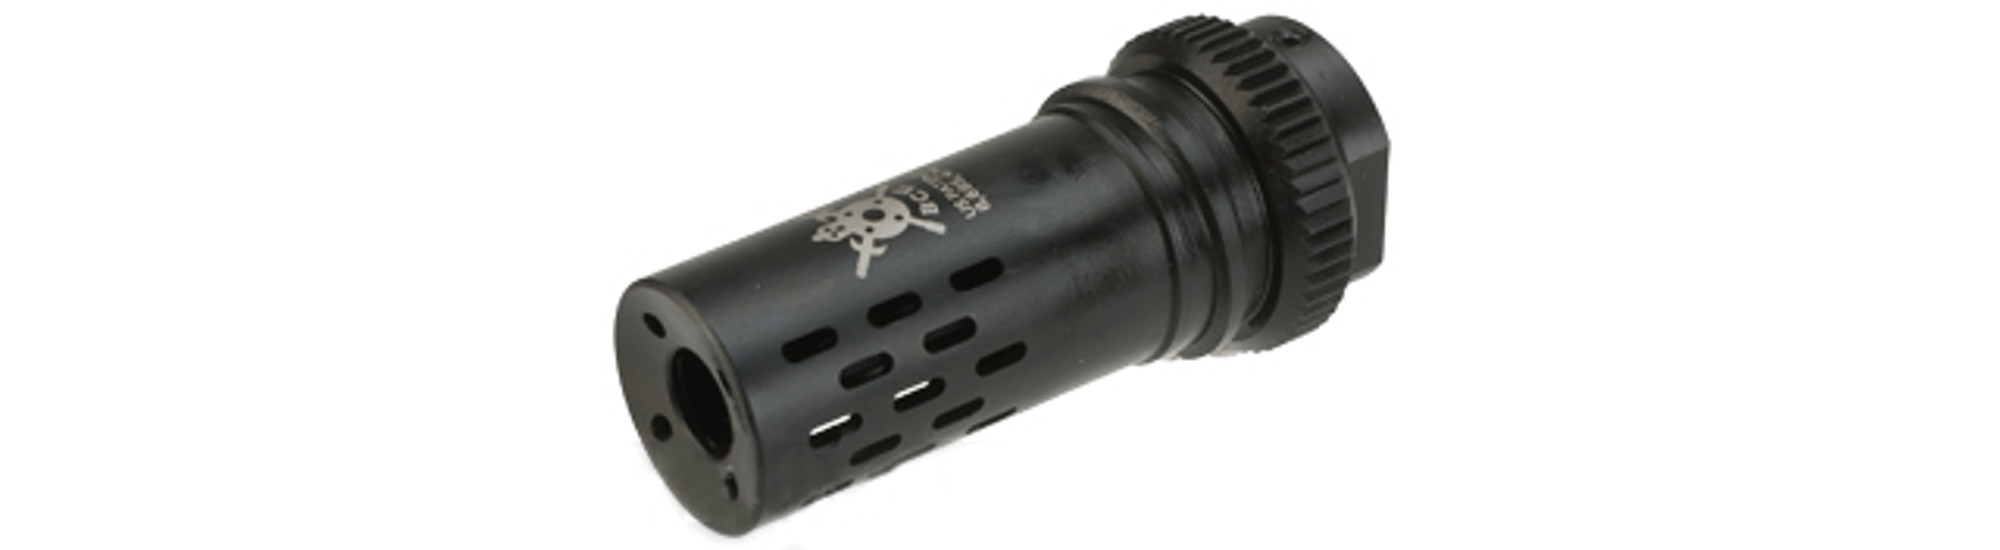 PTS Battlecomp 51.0 Flash Hider - 14mm Negative